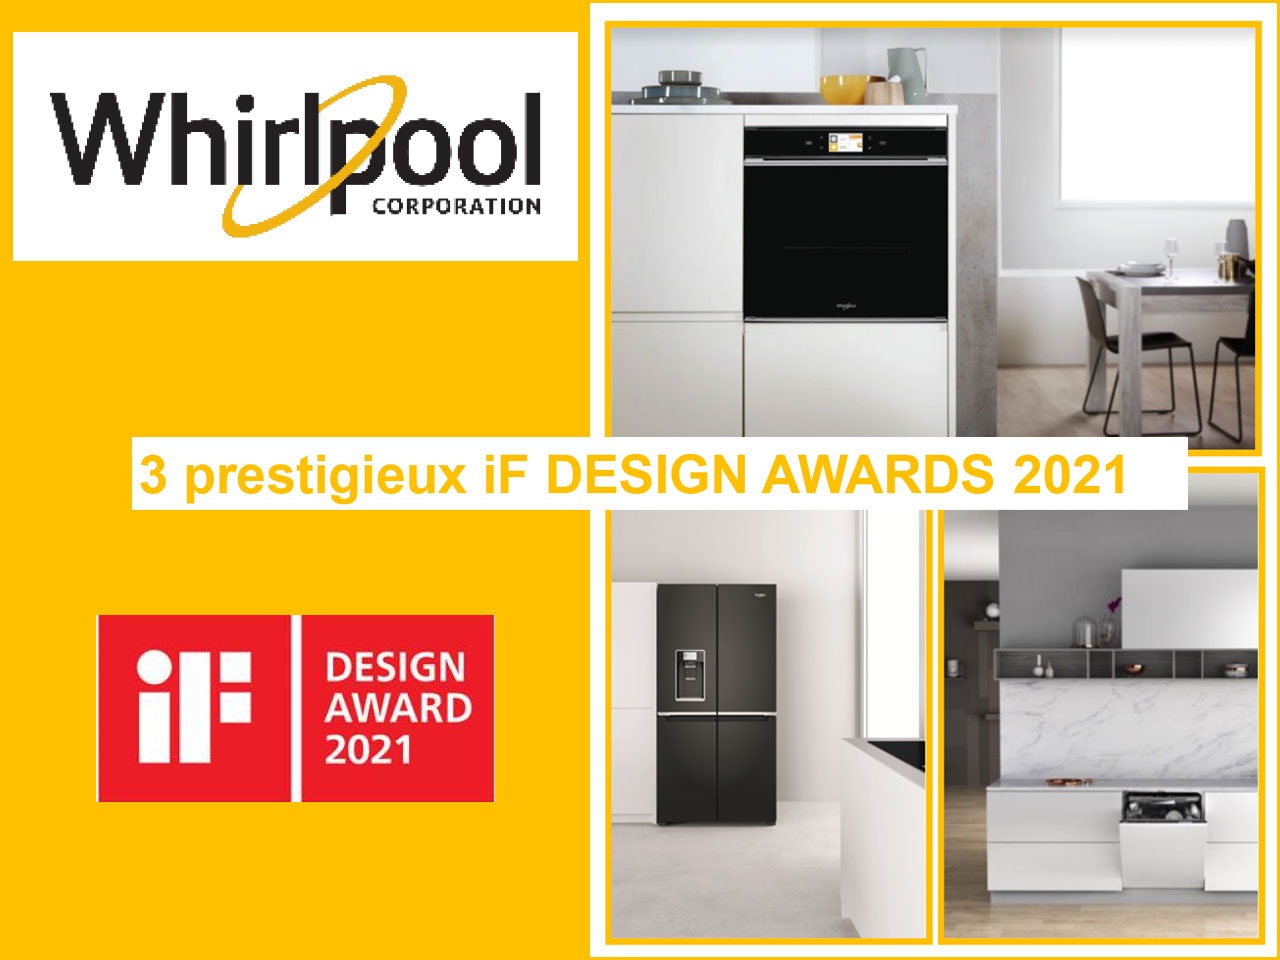 Whirlpool remporte 3 prestigieux iF DESIGN AWARDS 2021